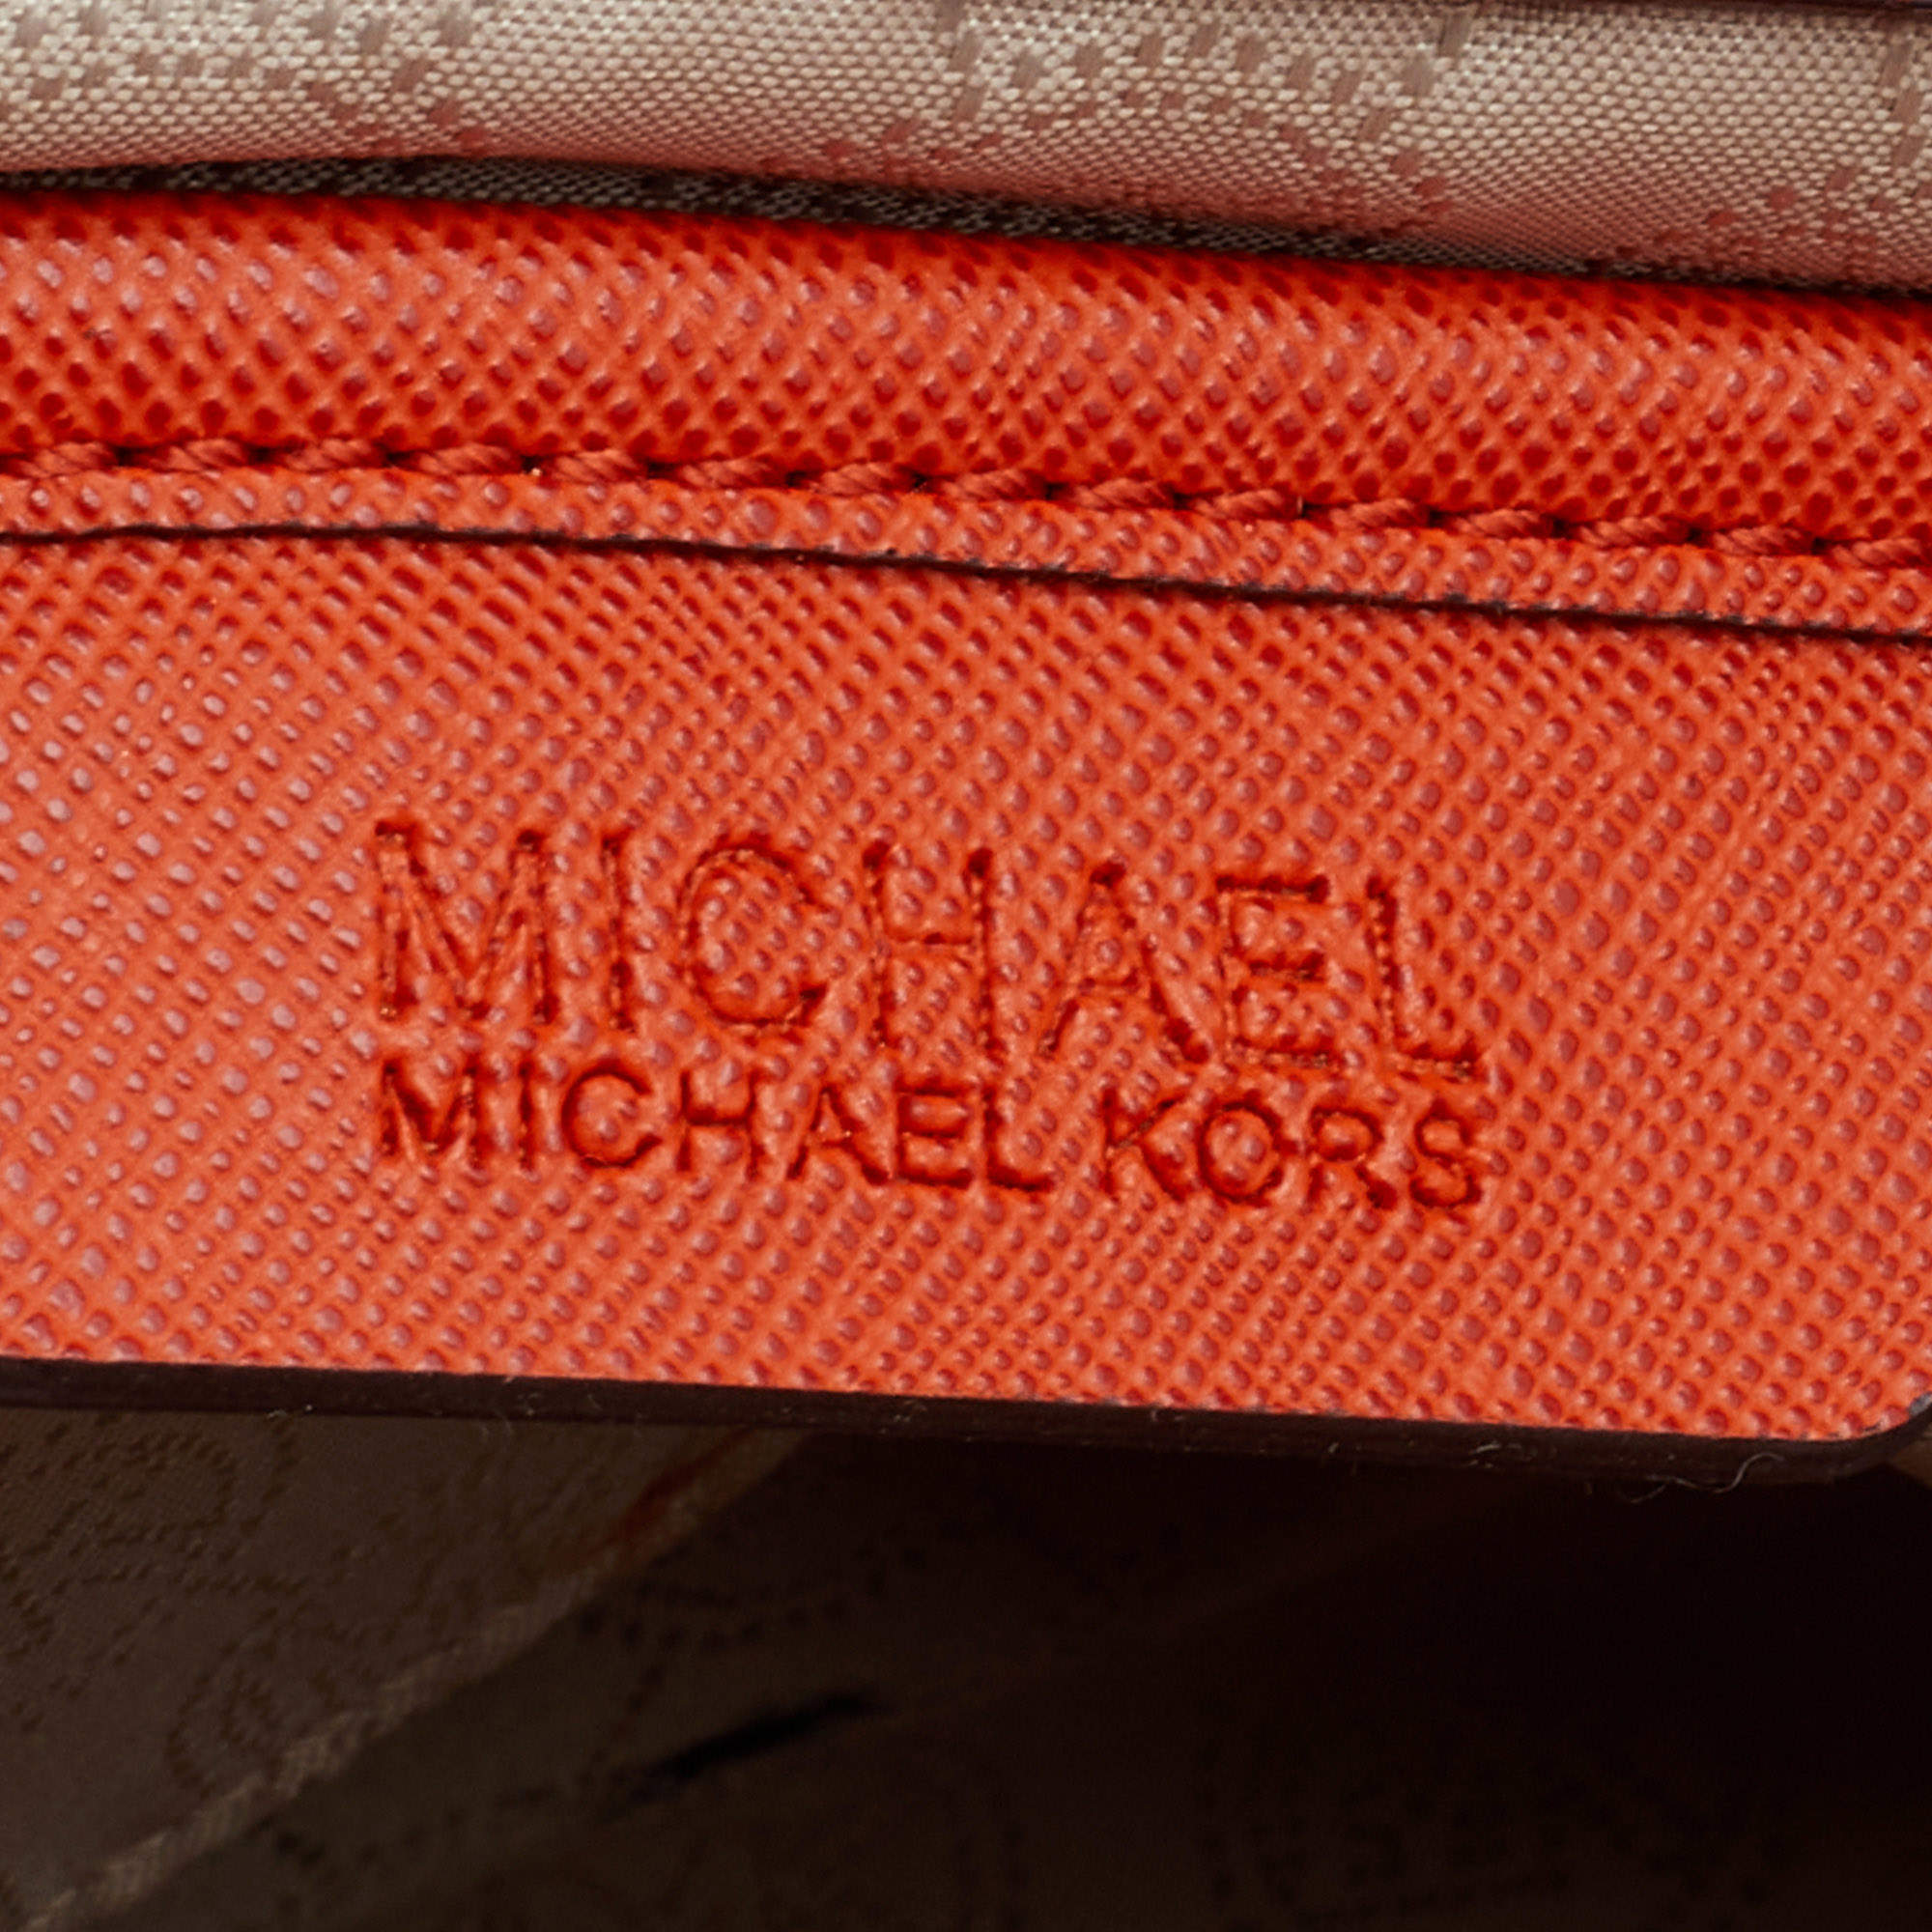 Michael Kors Selma Large Saffiano Leather Satchel Bag 30S3GLMS7L In ORANGE  - Excel Clothing